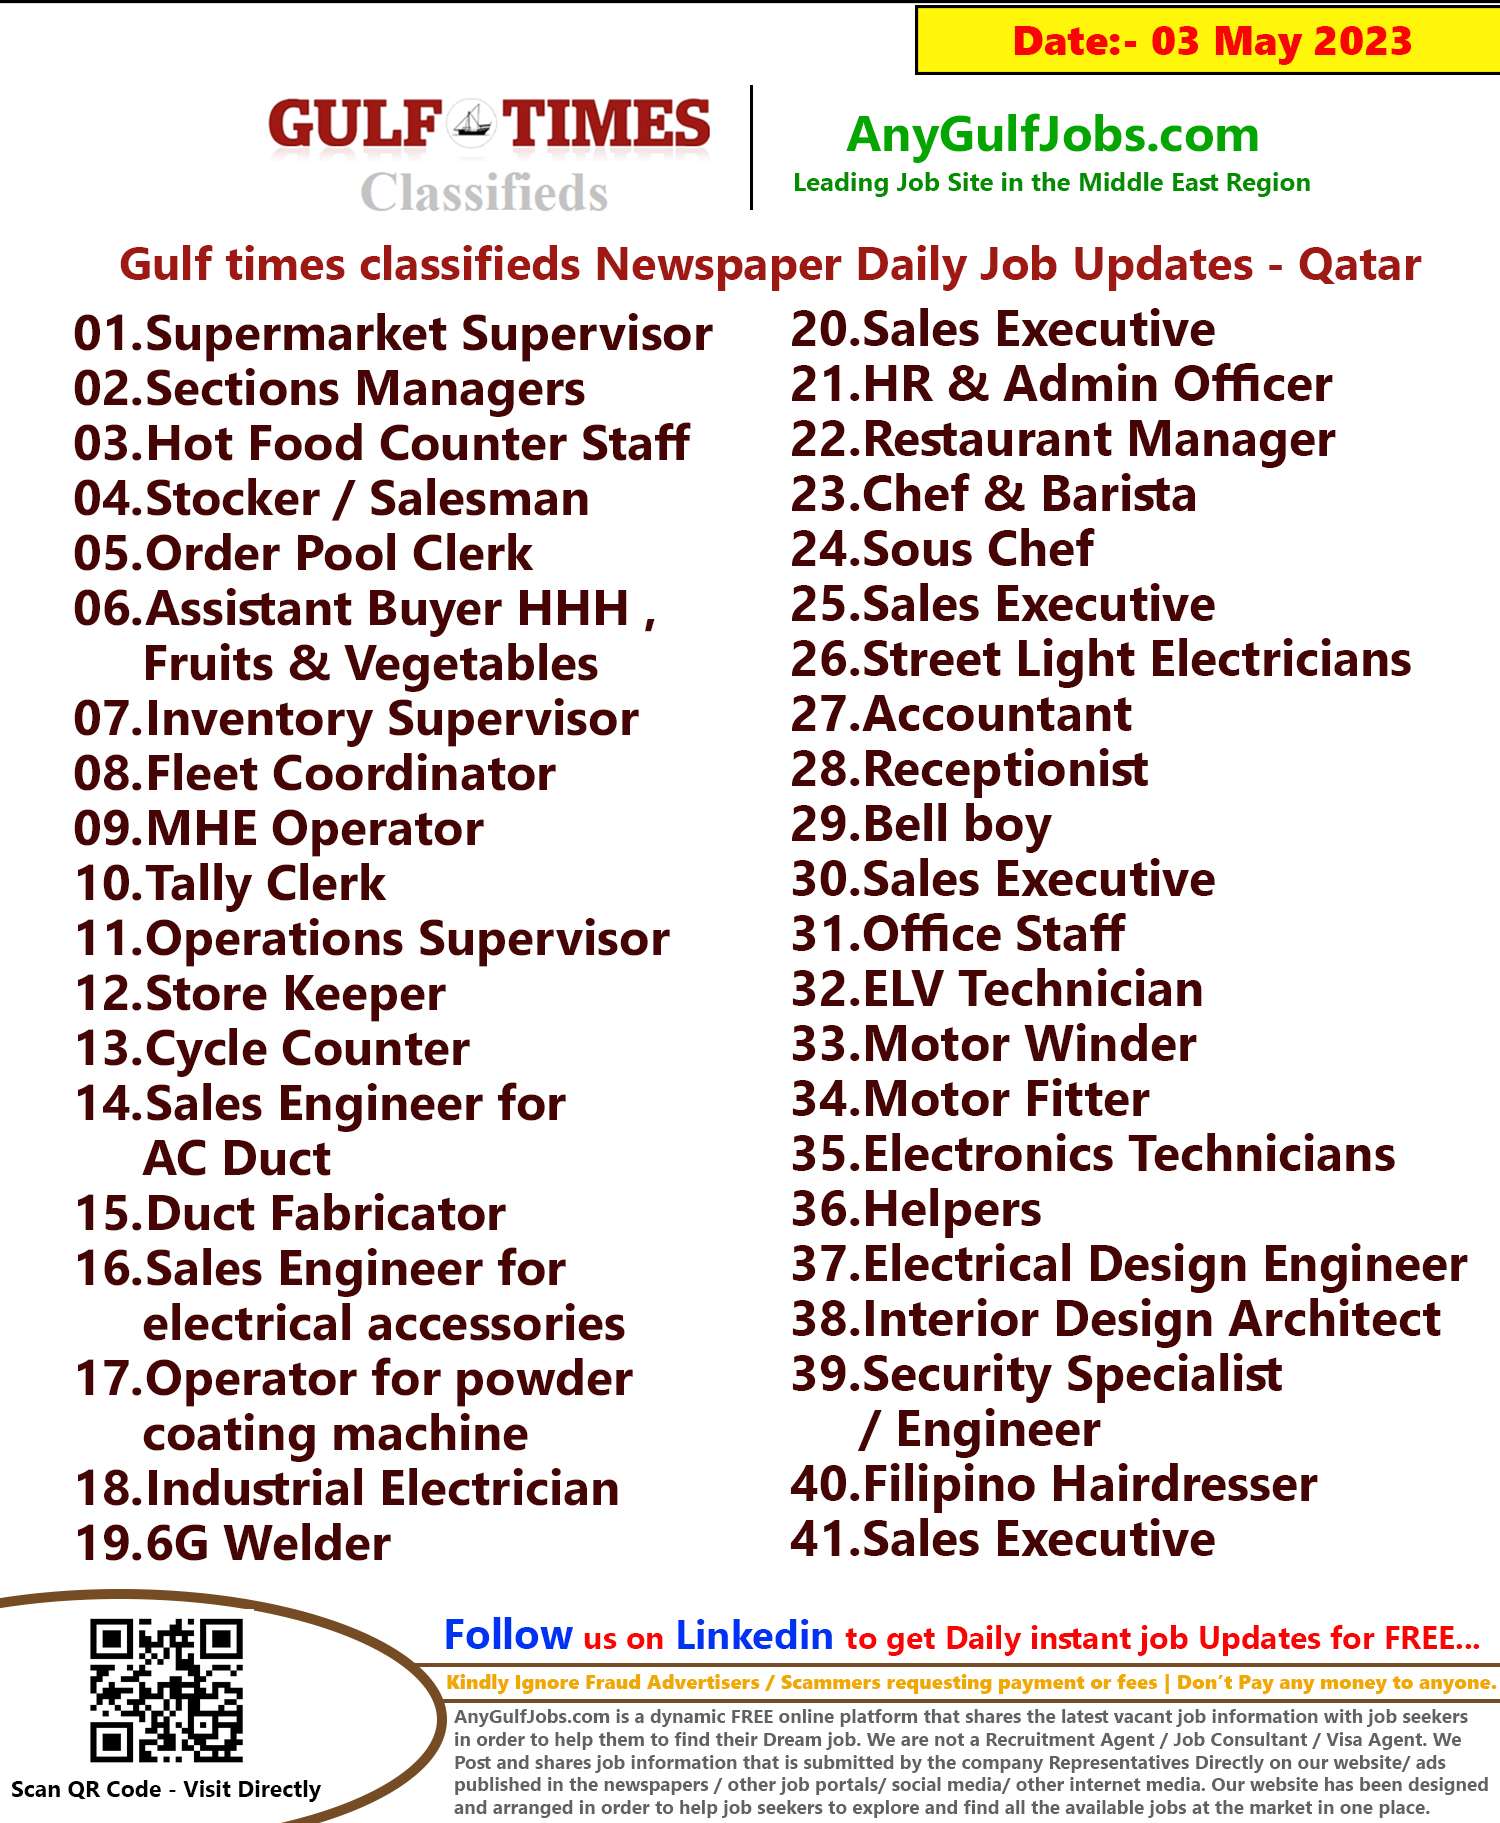 Gulf times classifieds Job Vacancies Qatar - 03 May 2023